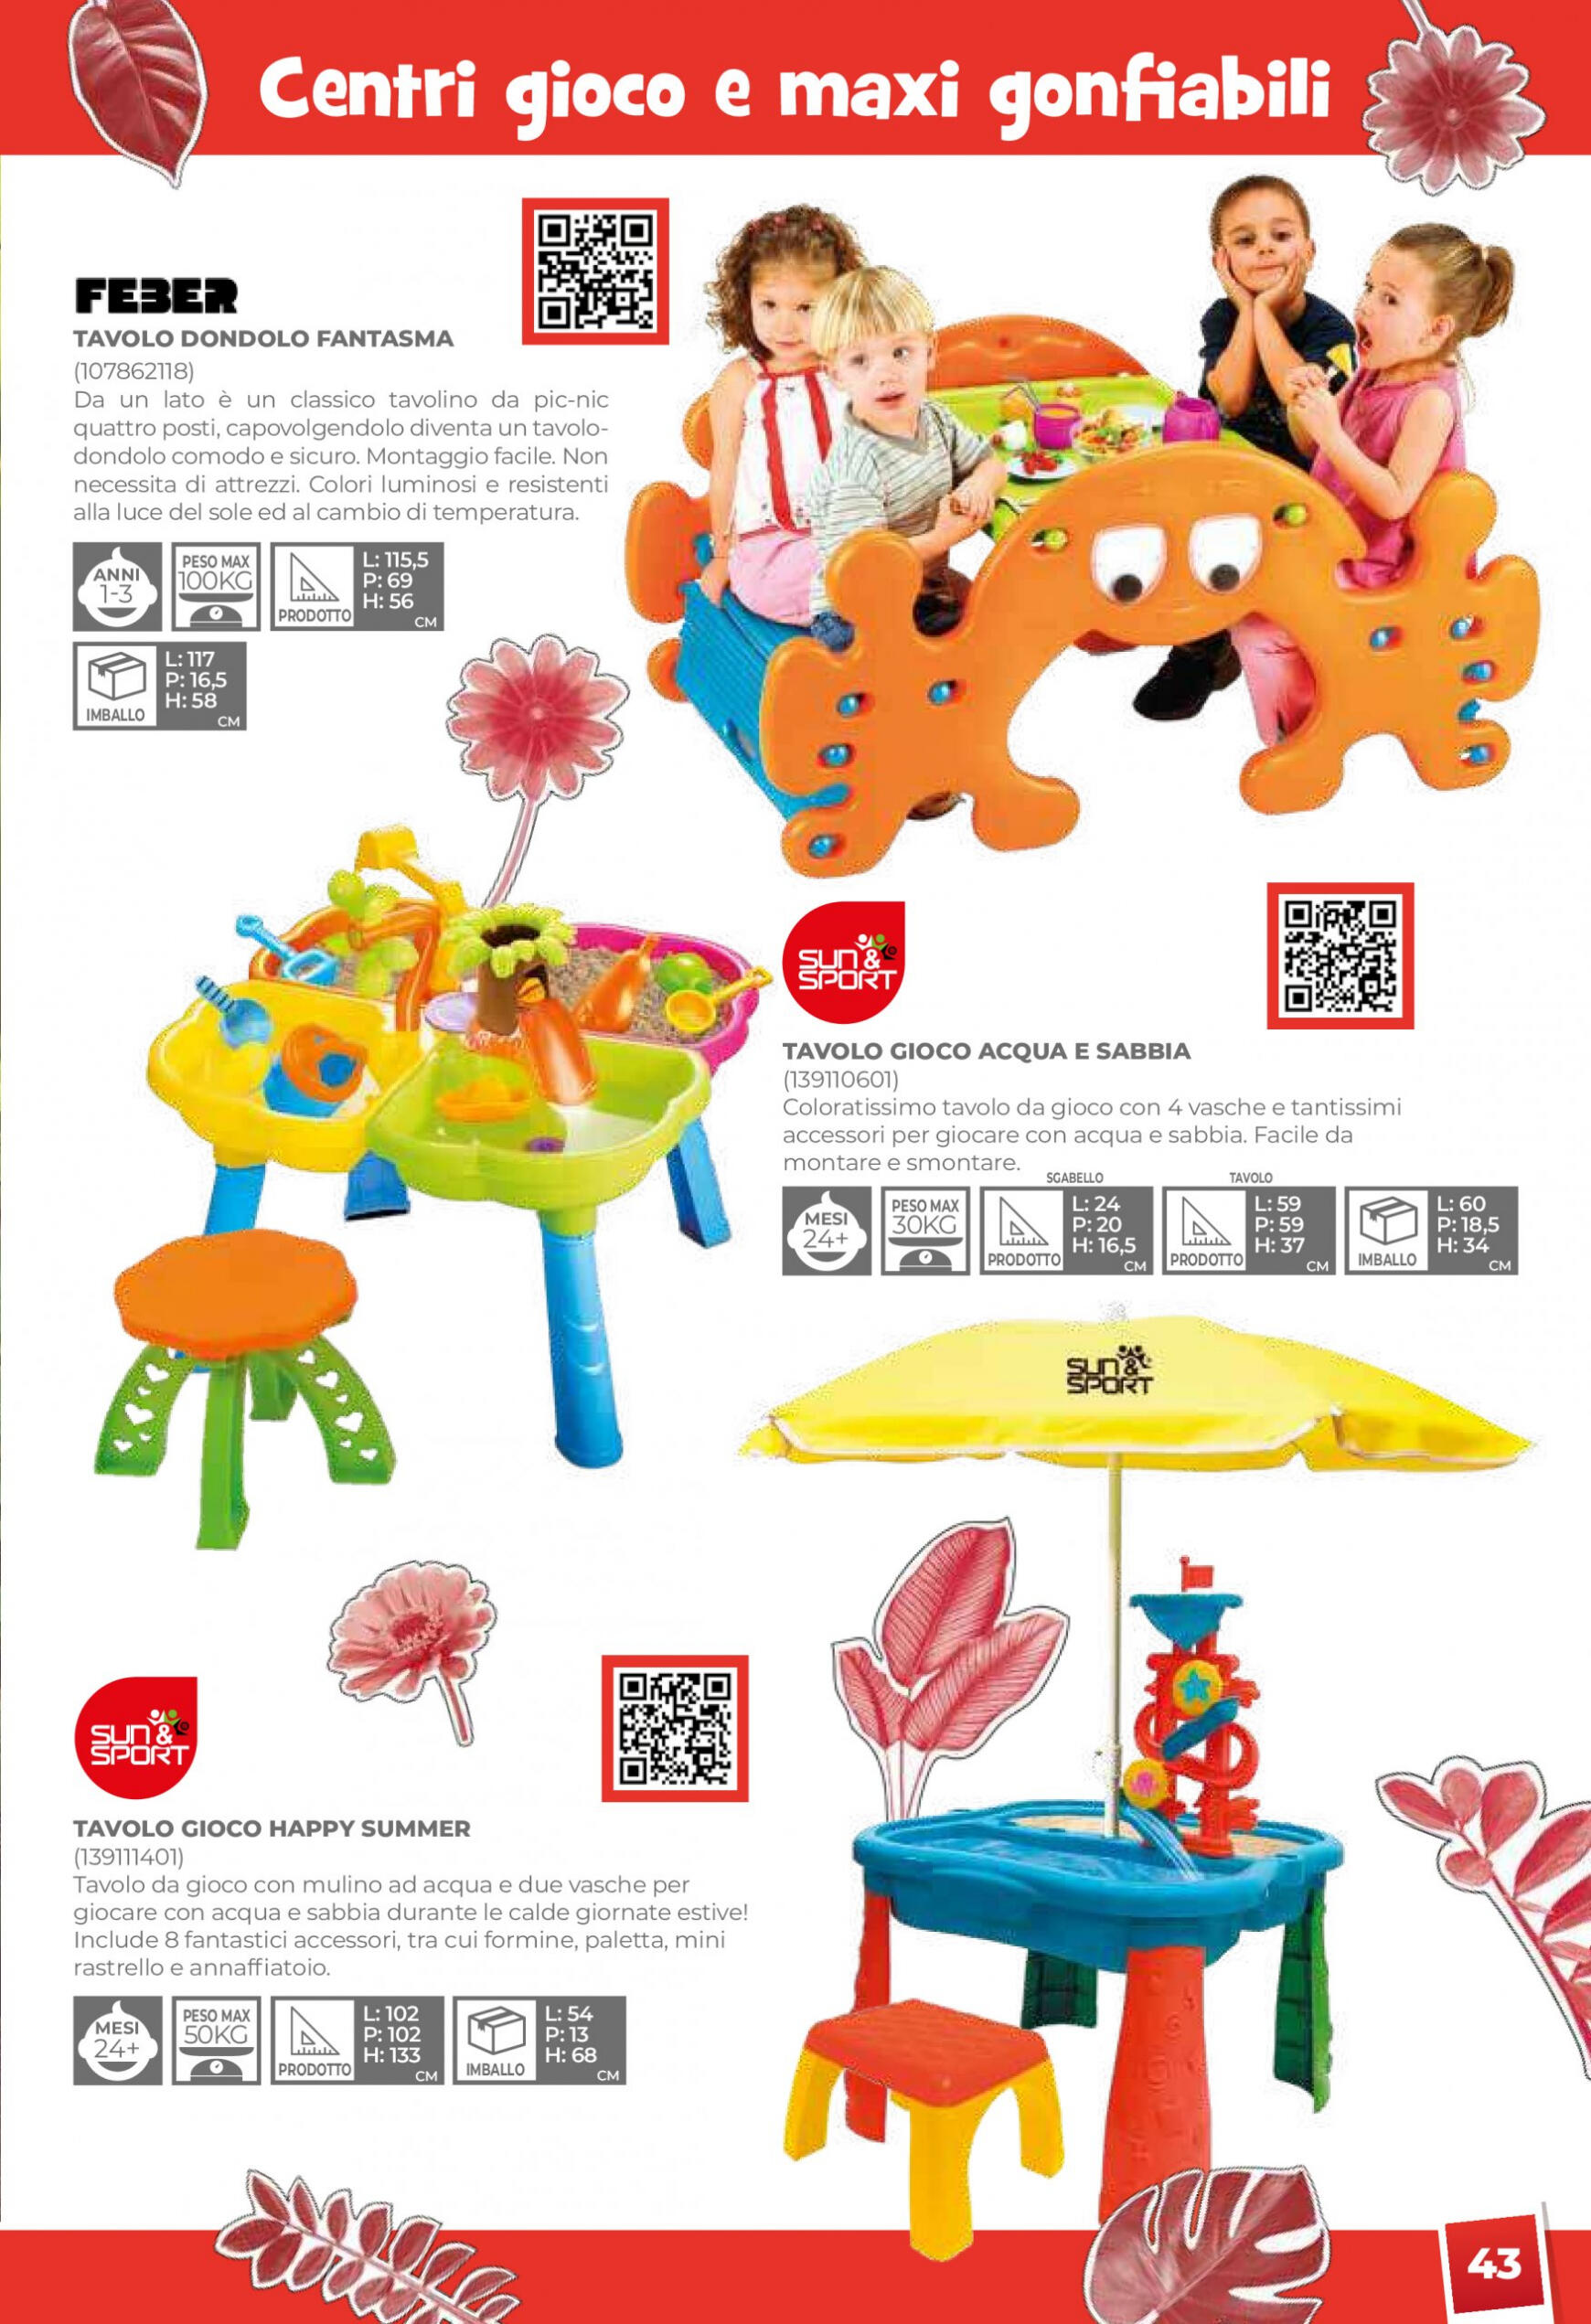 toys-center - Nuovo volantino Toys Center 01.05. - 31.12. - page: 45